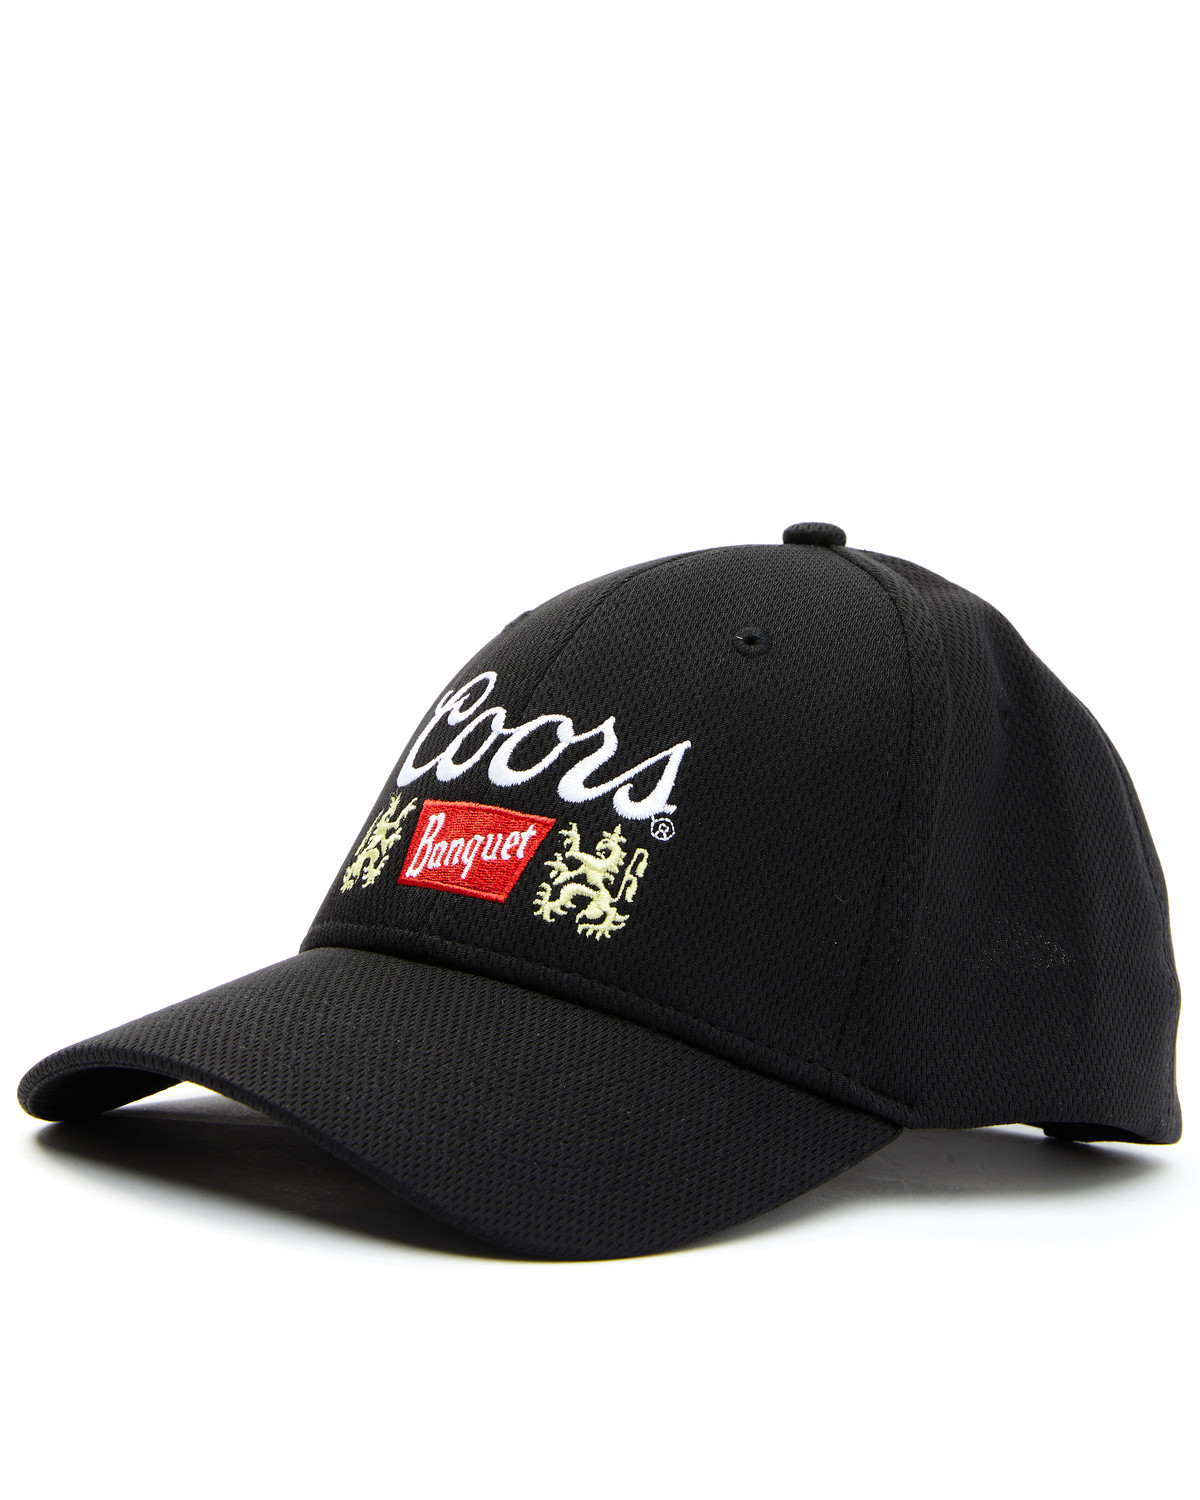 H3 Sportsgear Men's Black Coors Banquet Embroidered Logo Ball Cap ...